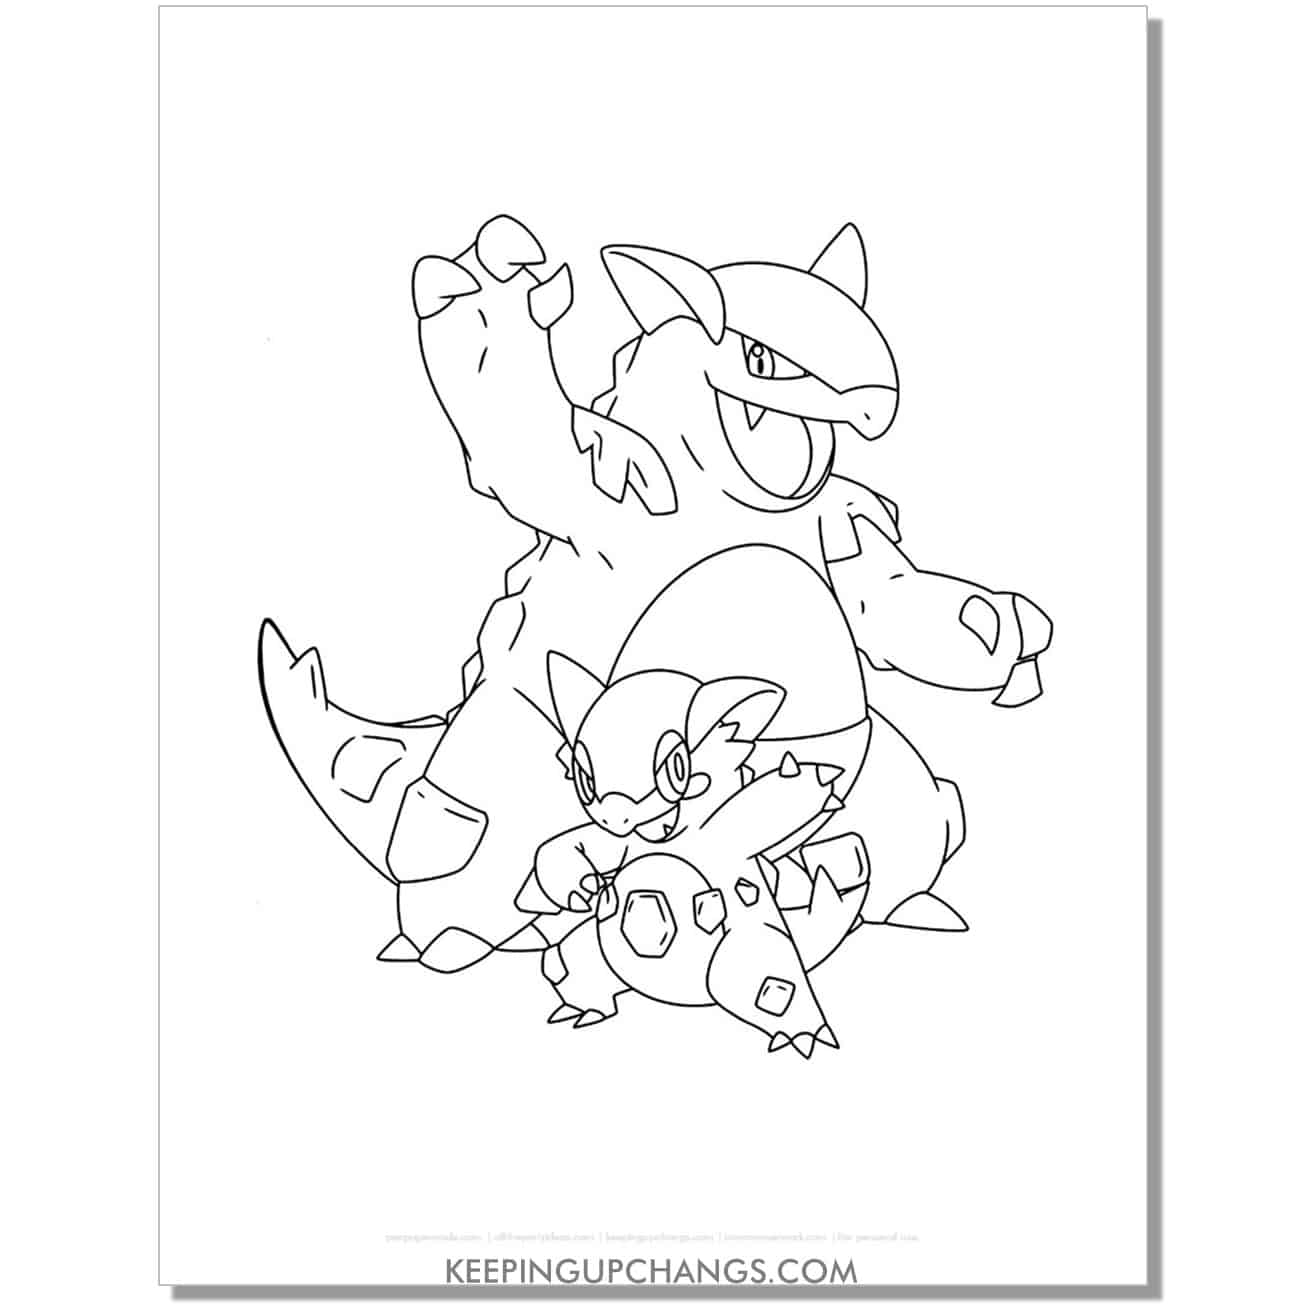 kangaskhan and baby pokemon coloring page, sheet.